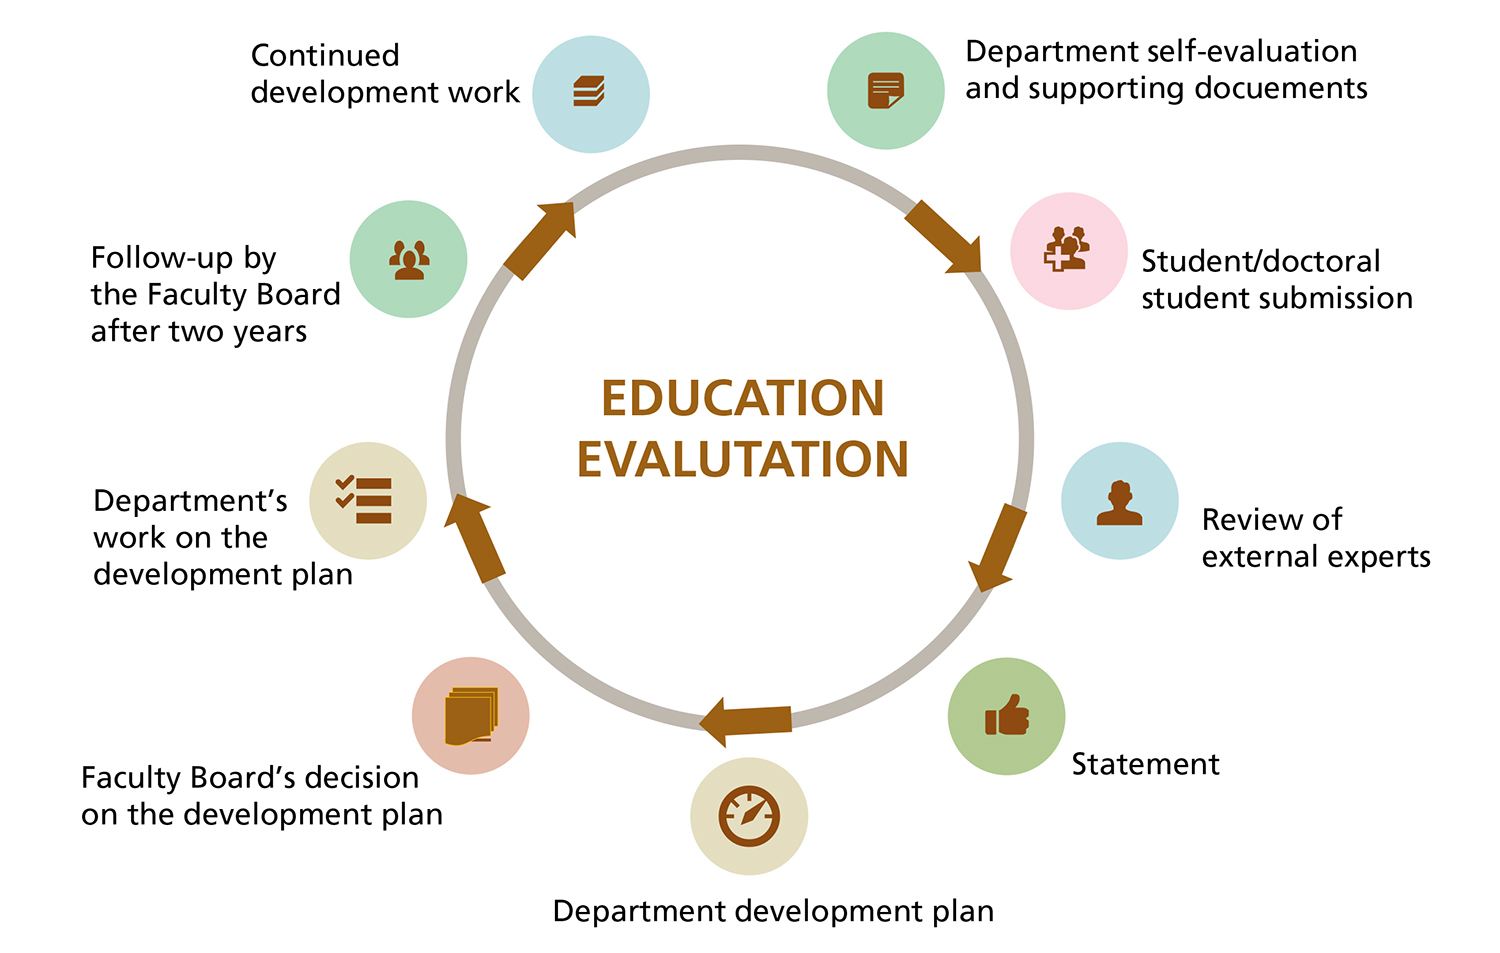 studies in educational evaluation